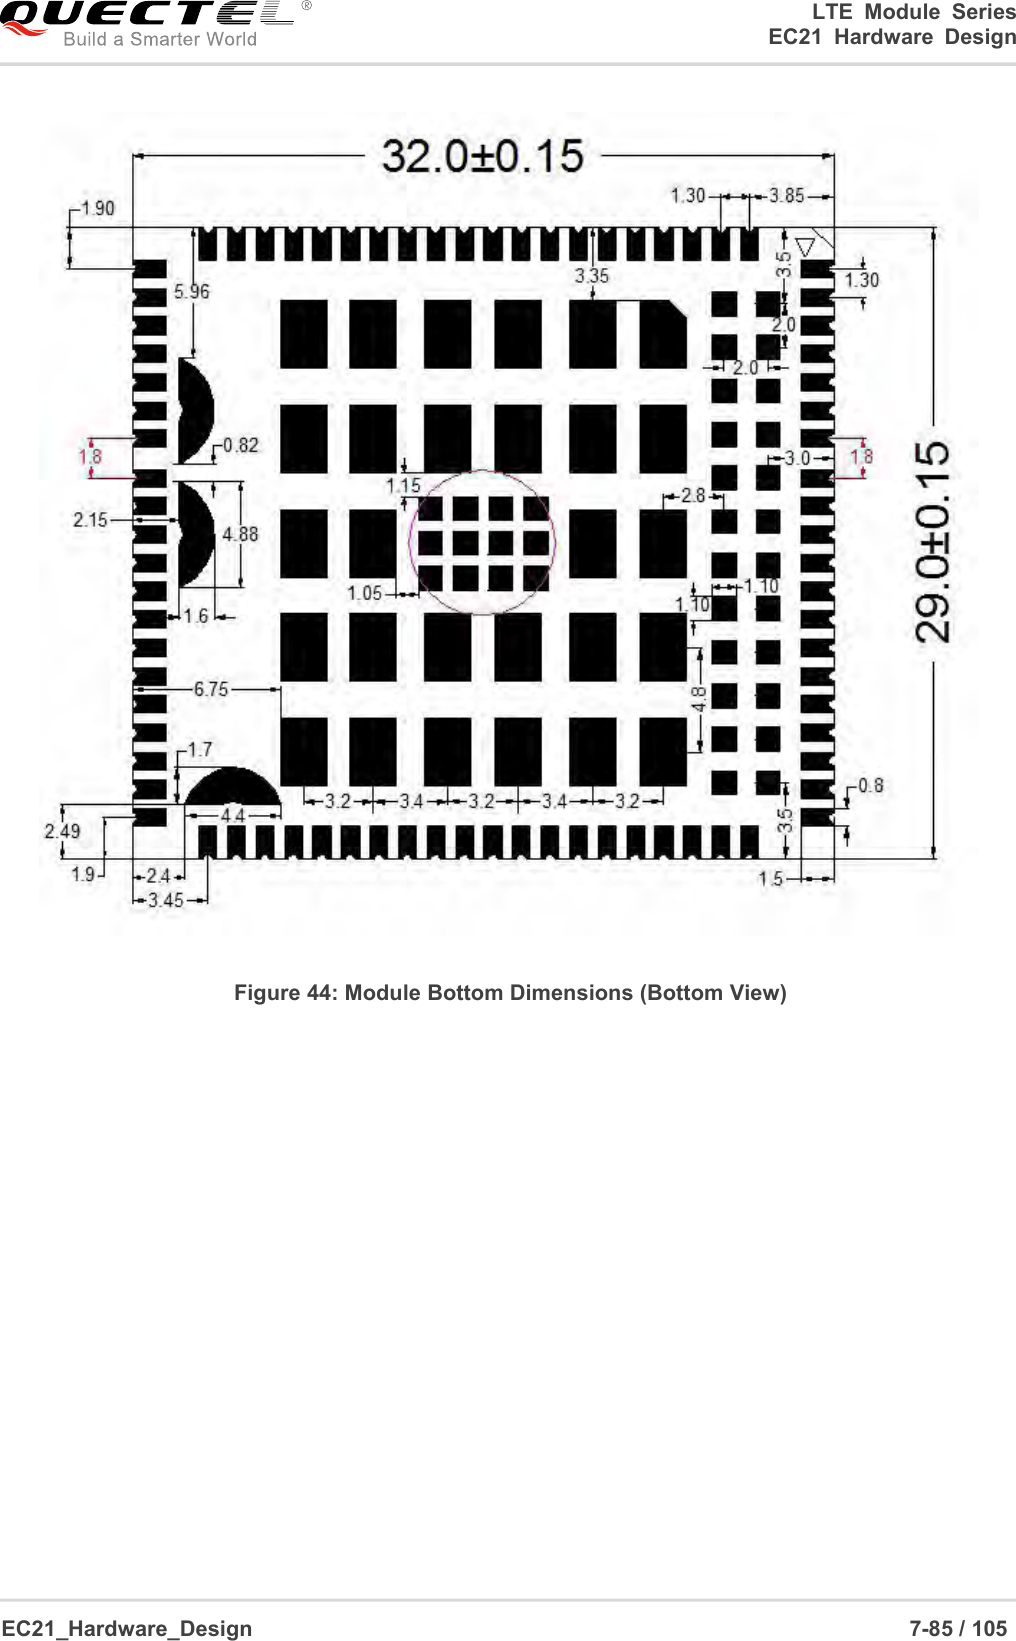 LTE Module SeriesEC21 Hardware DesignEC21_Hardware_Design 7-85 / 105Figure 44: Module Bottom Dimensions (Bottom View)